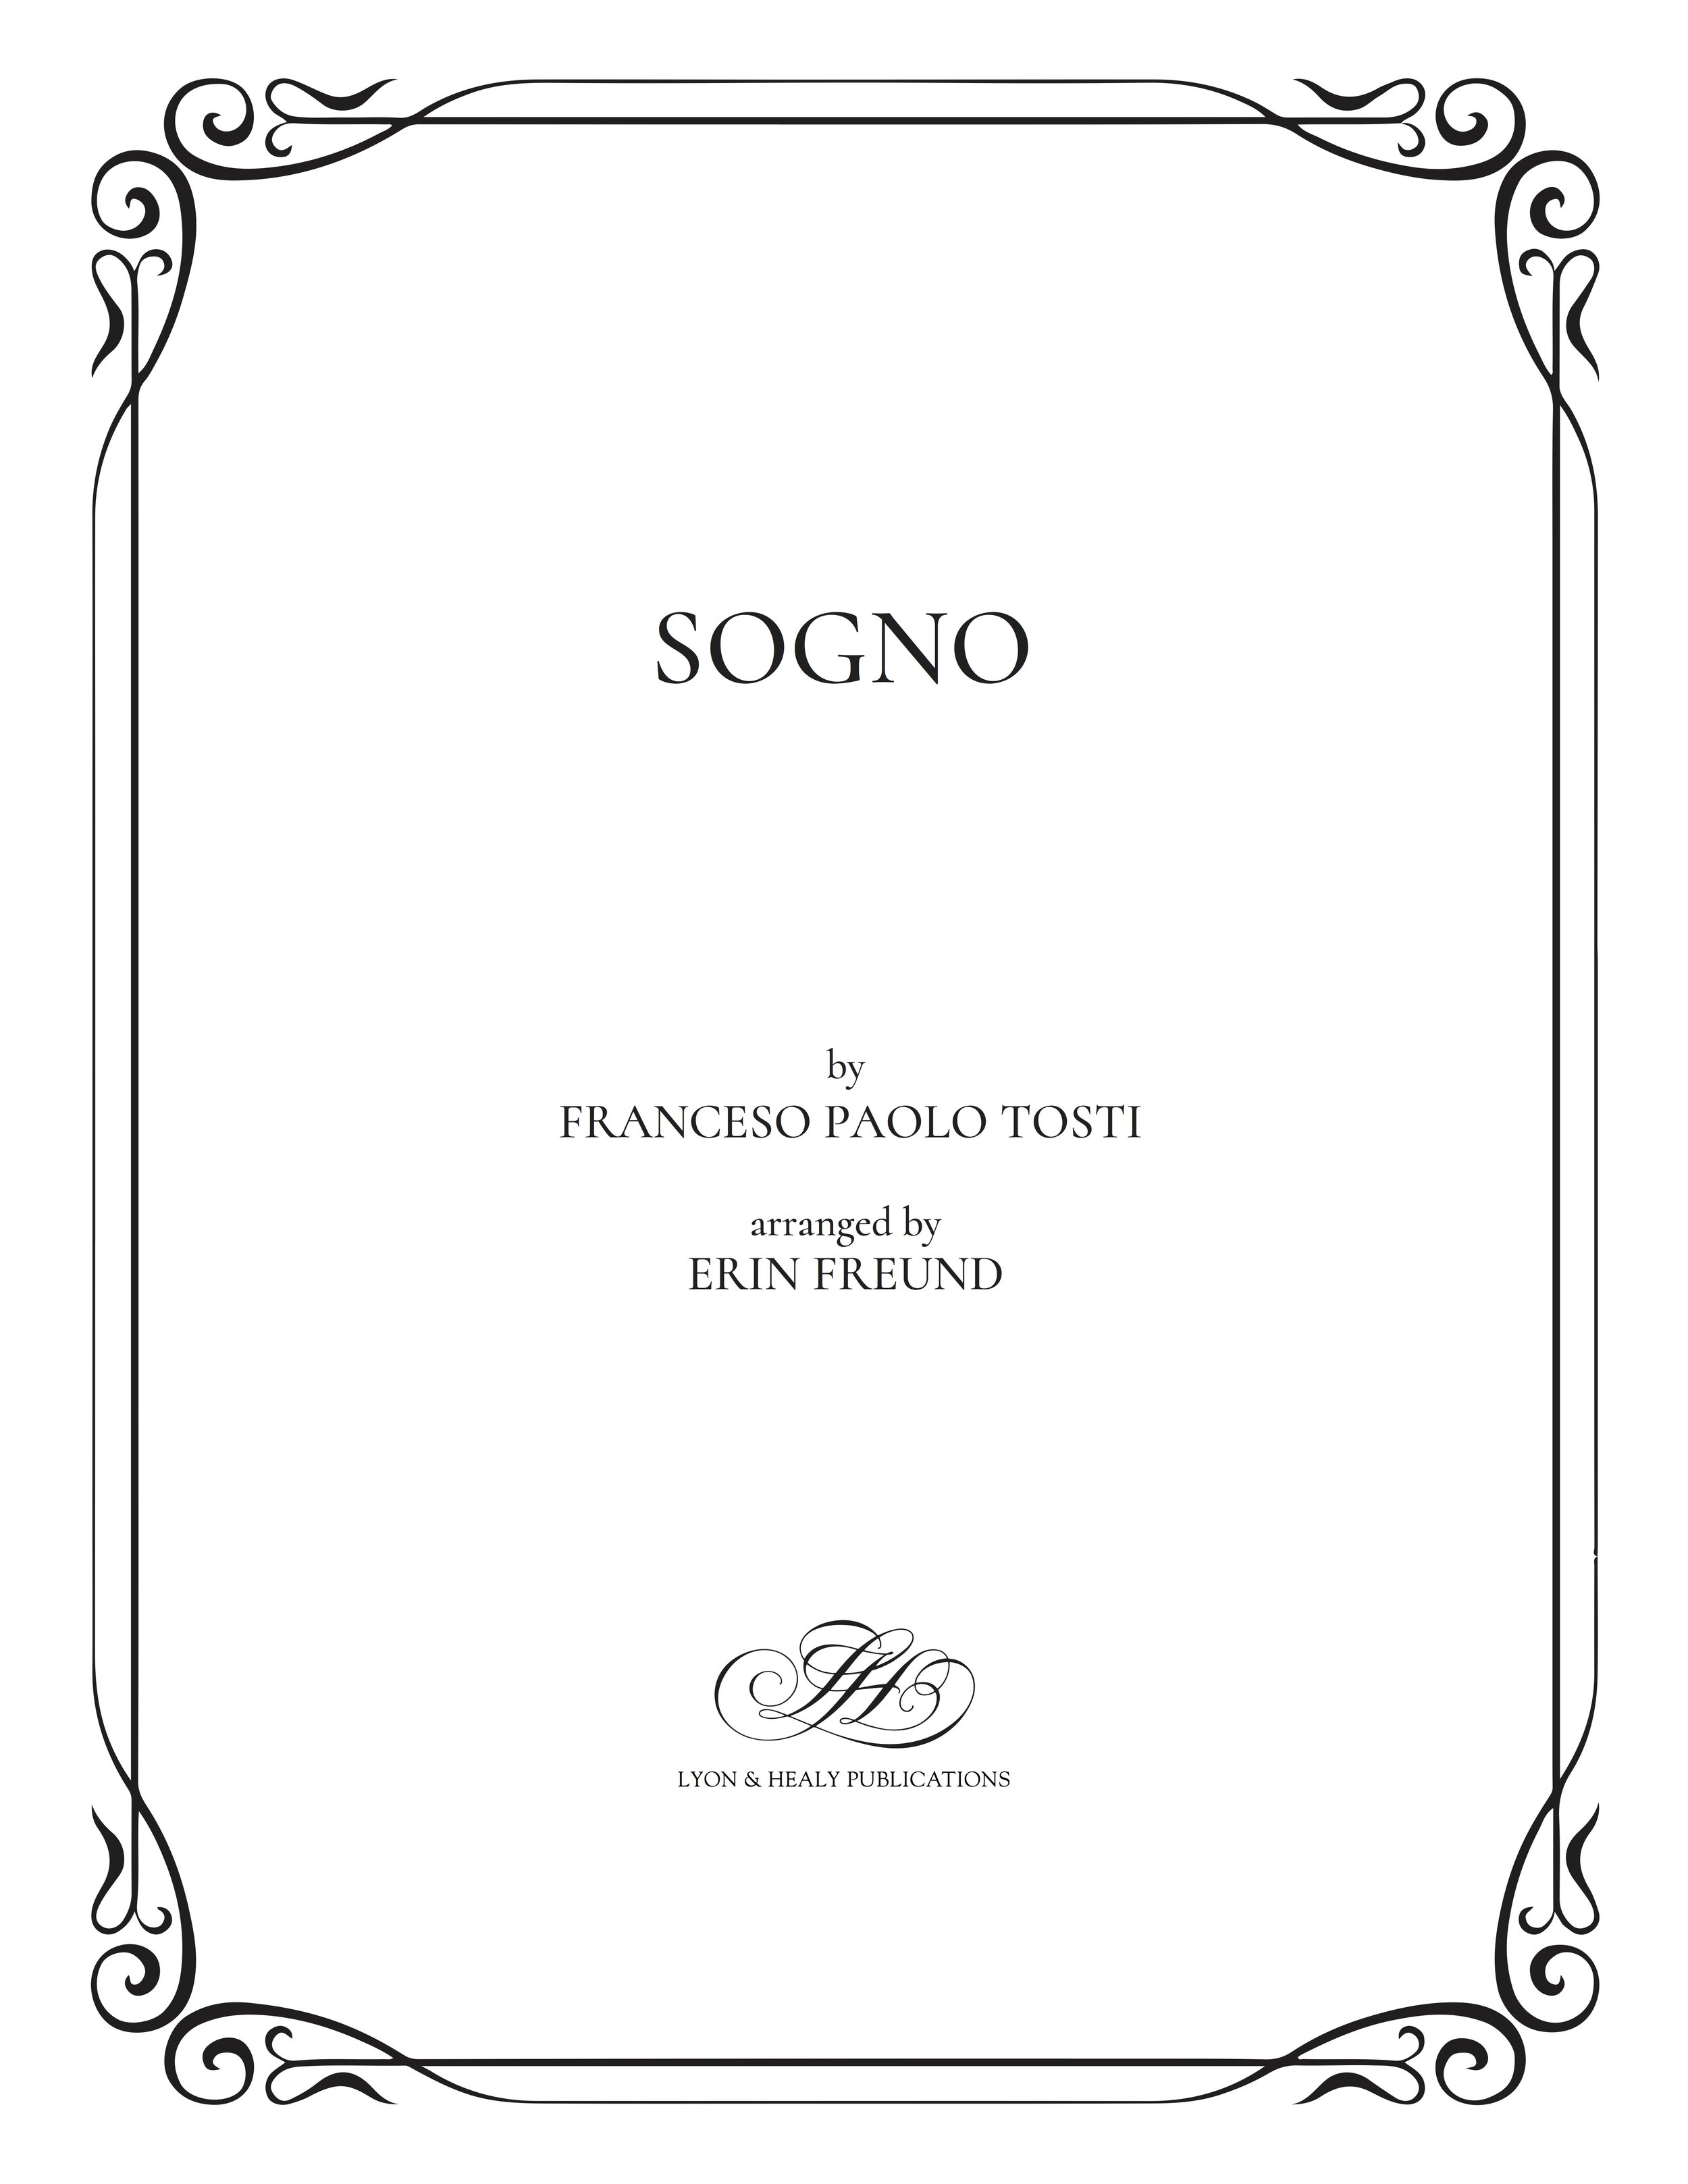 Sogno - Tosti-Freund cover.jpg